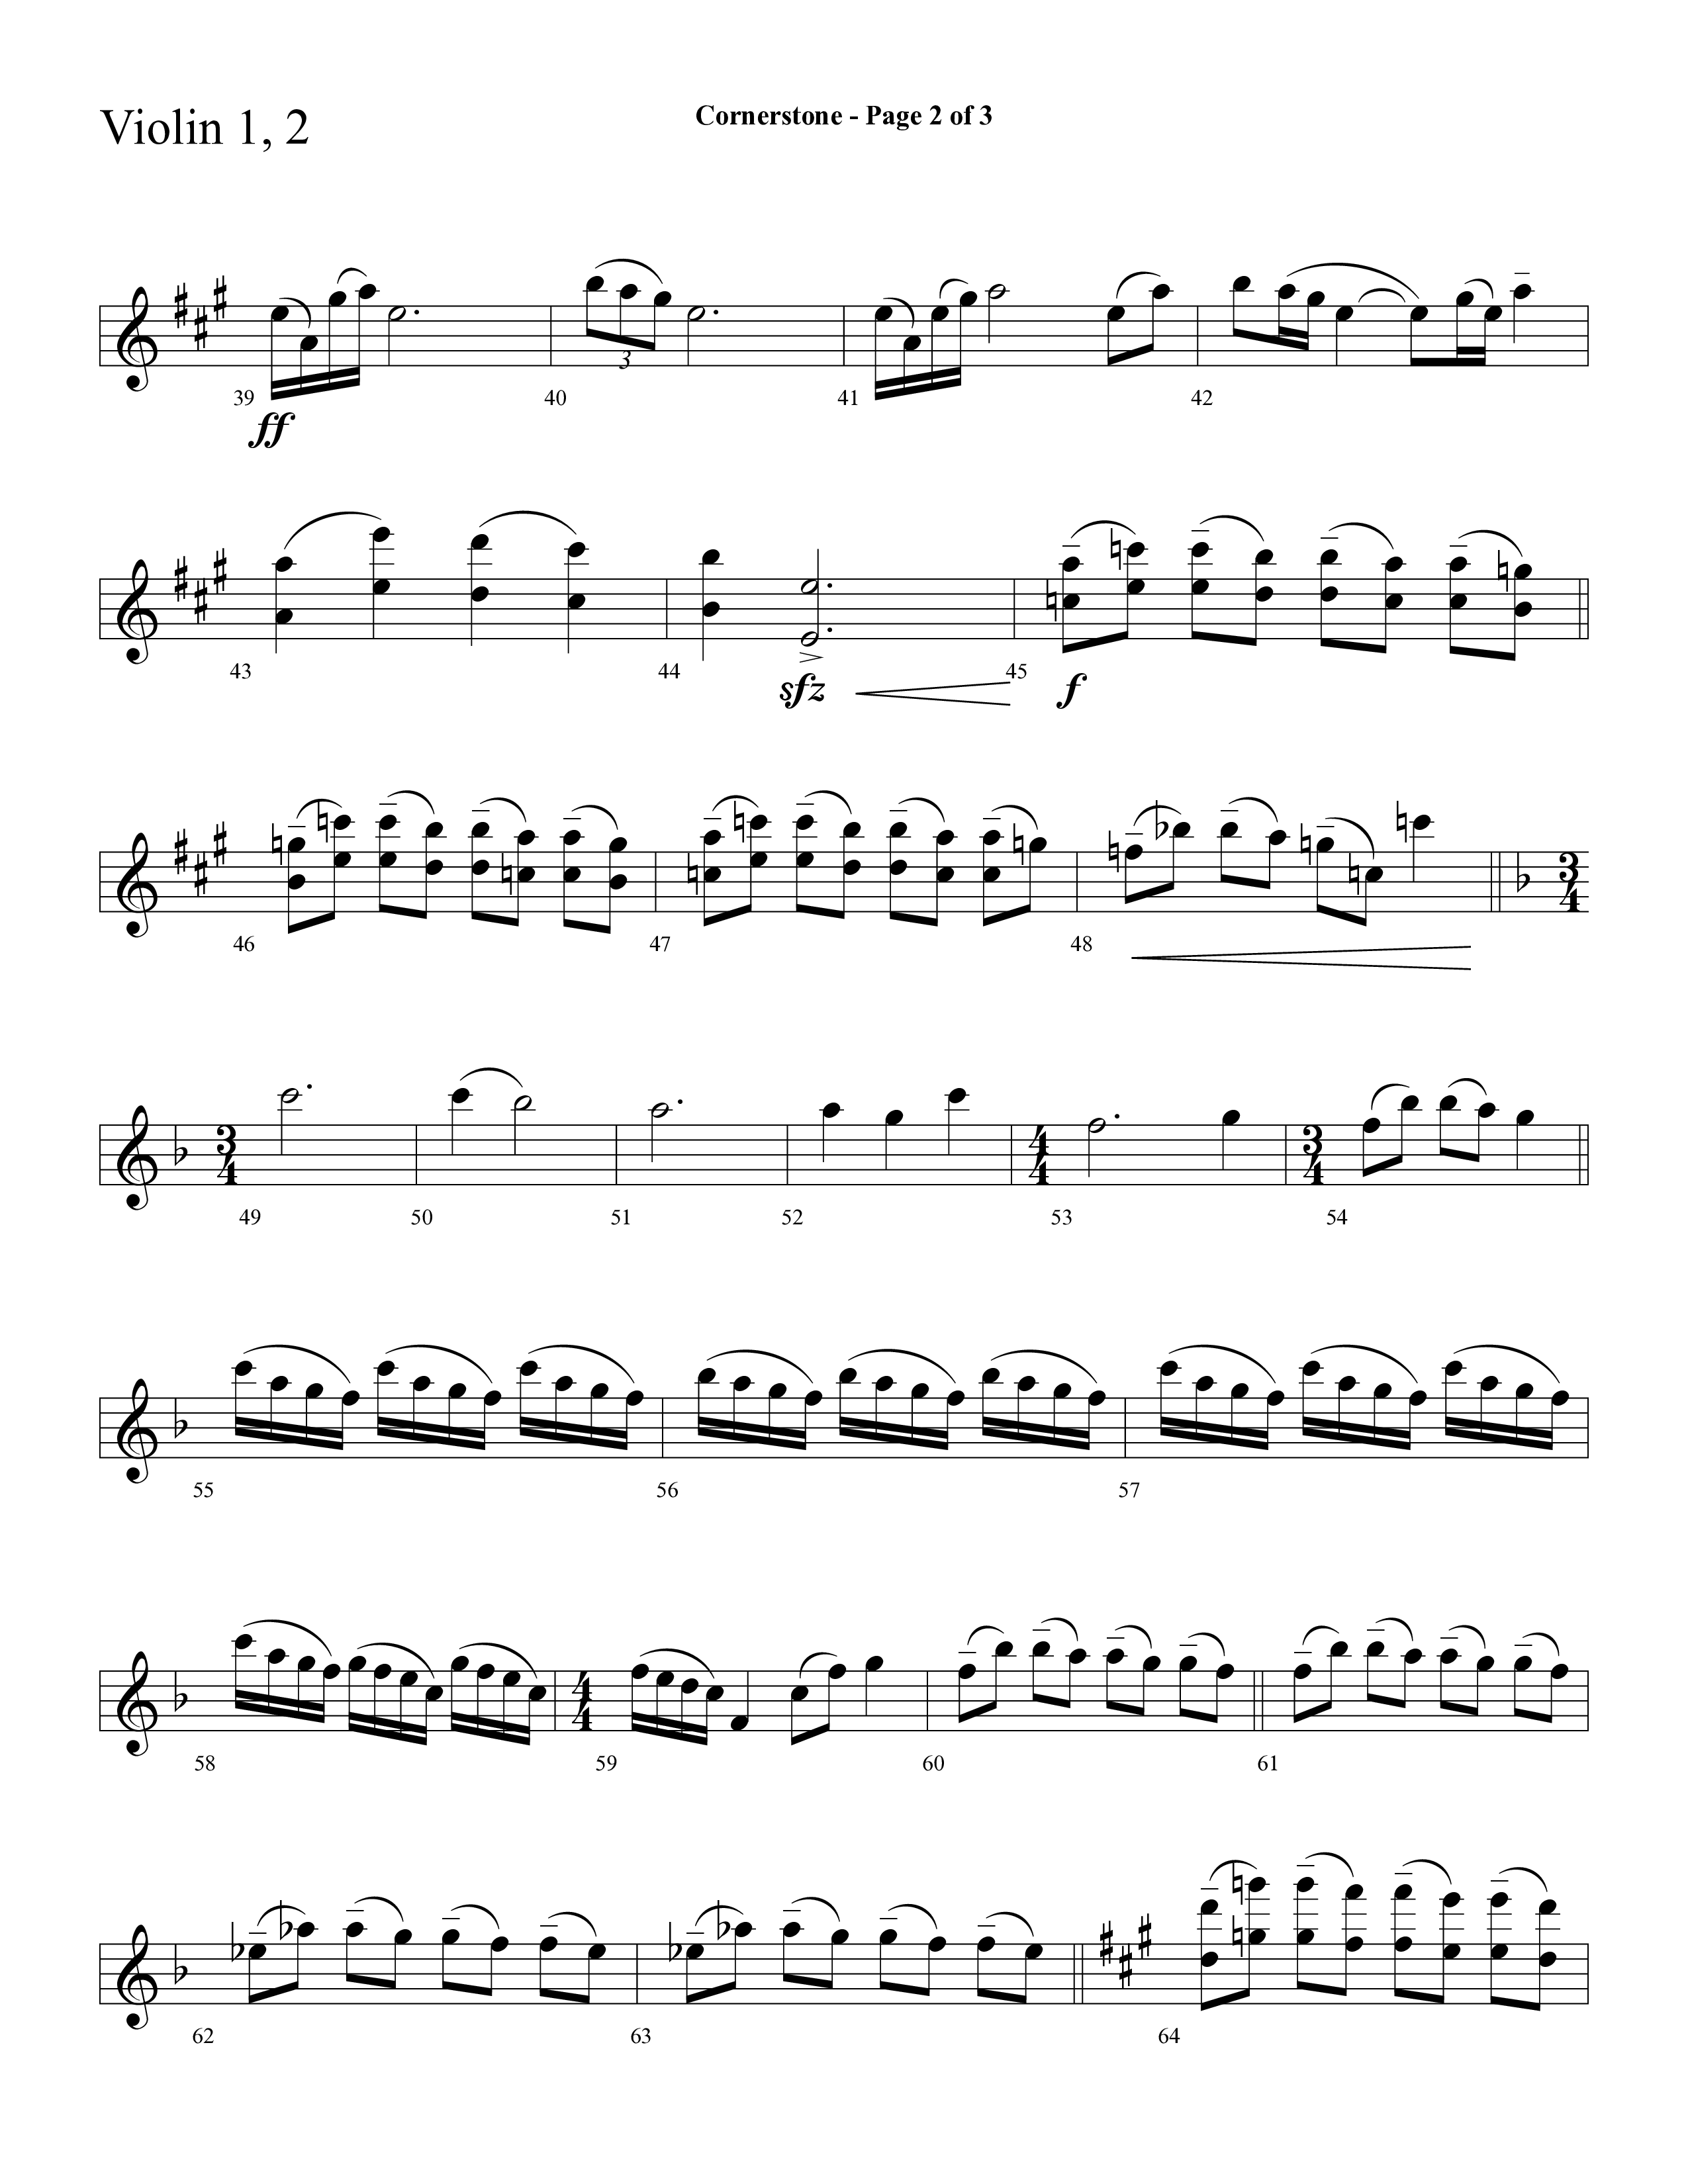 Cornerstone (with The Solid Rock) (Choral Anthem SATB) Violin 1/2 (Lifeway Choral / Arr. Cliff Duren)